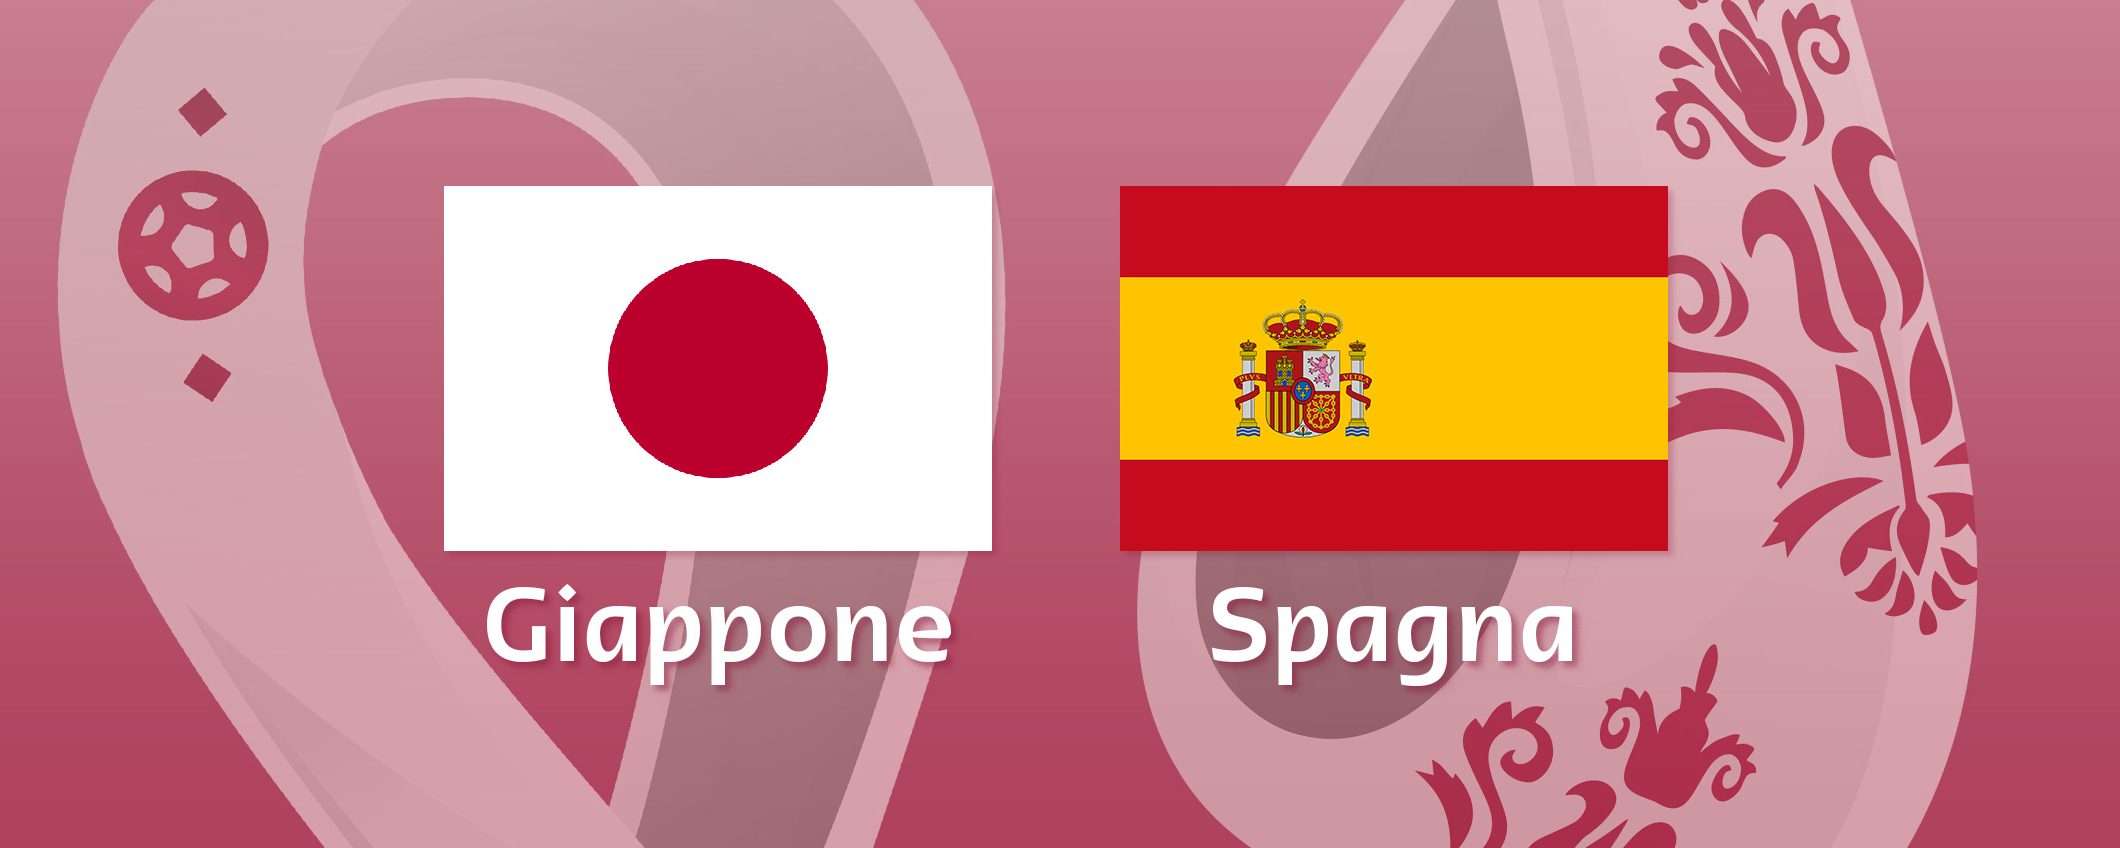 Come vedere Giappone-Spagna in streaming